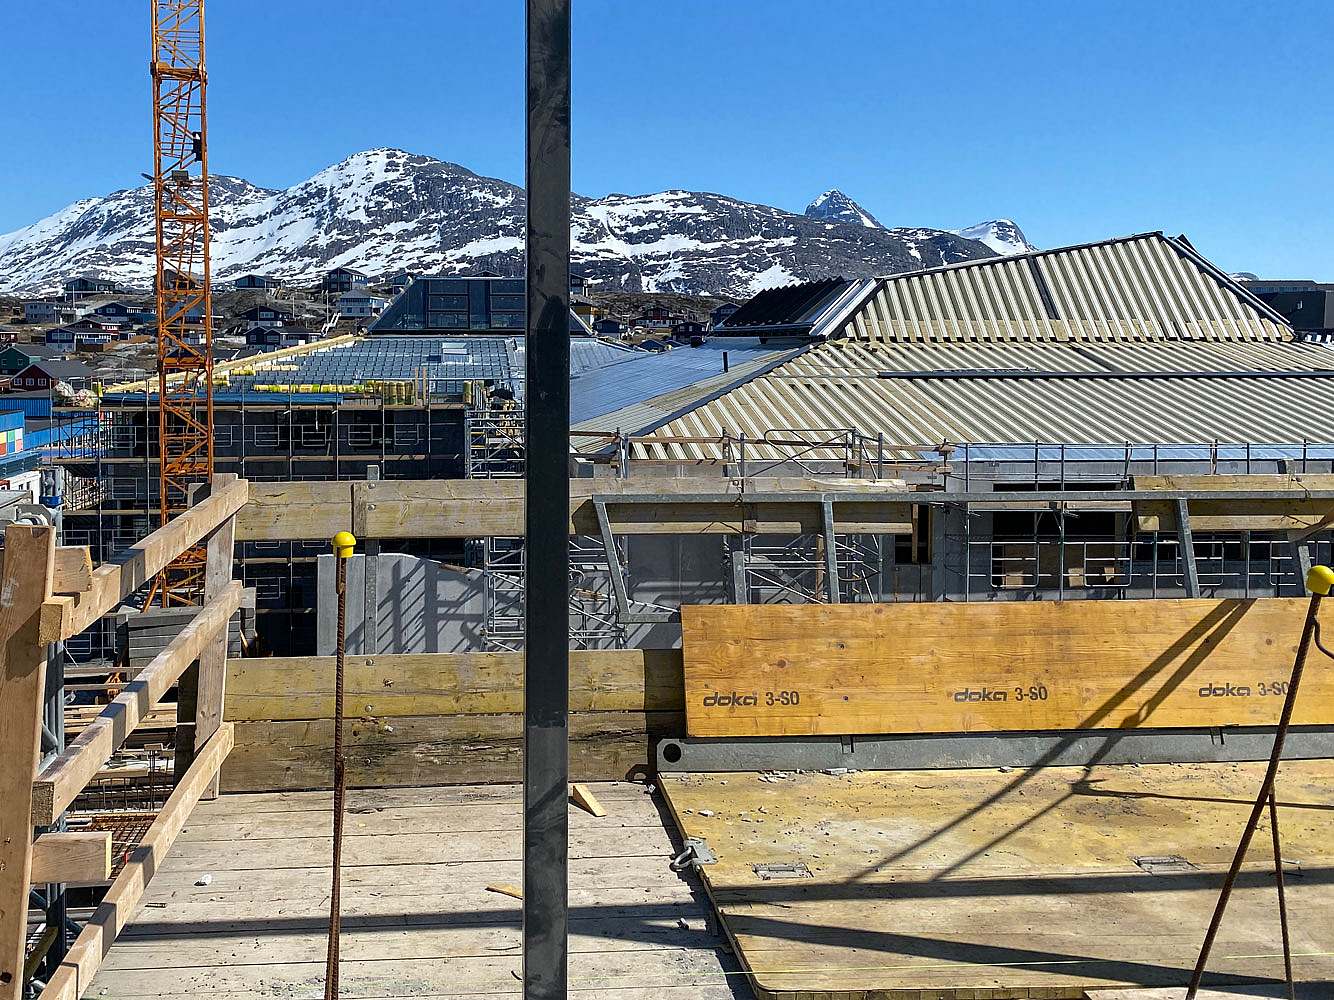 Take Nuuk school construction site